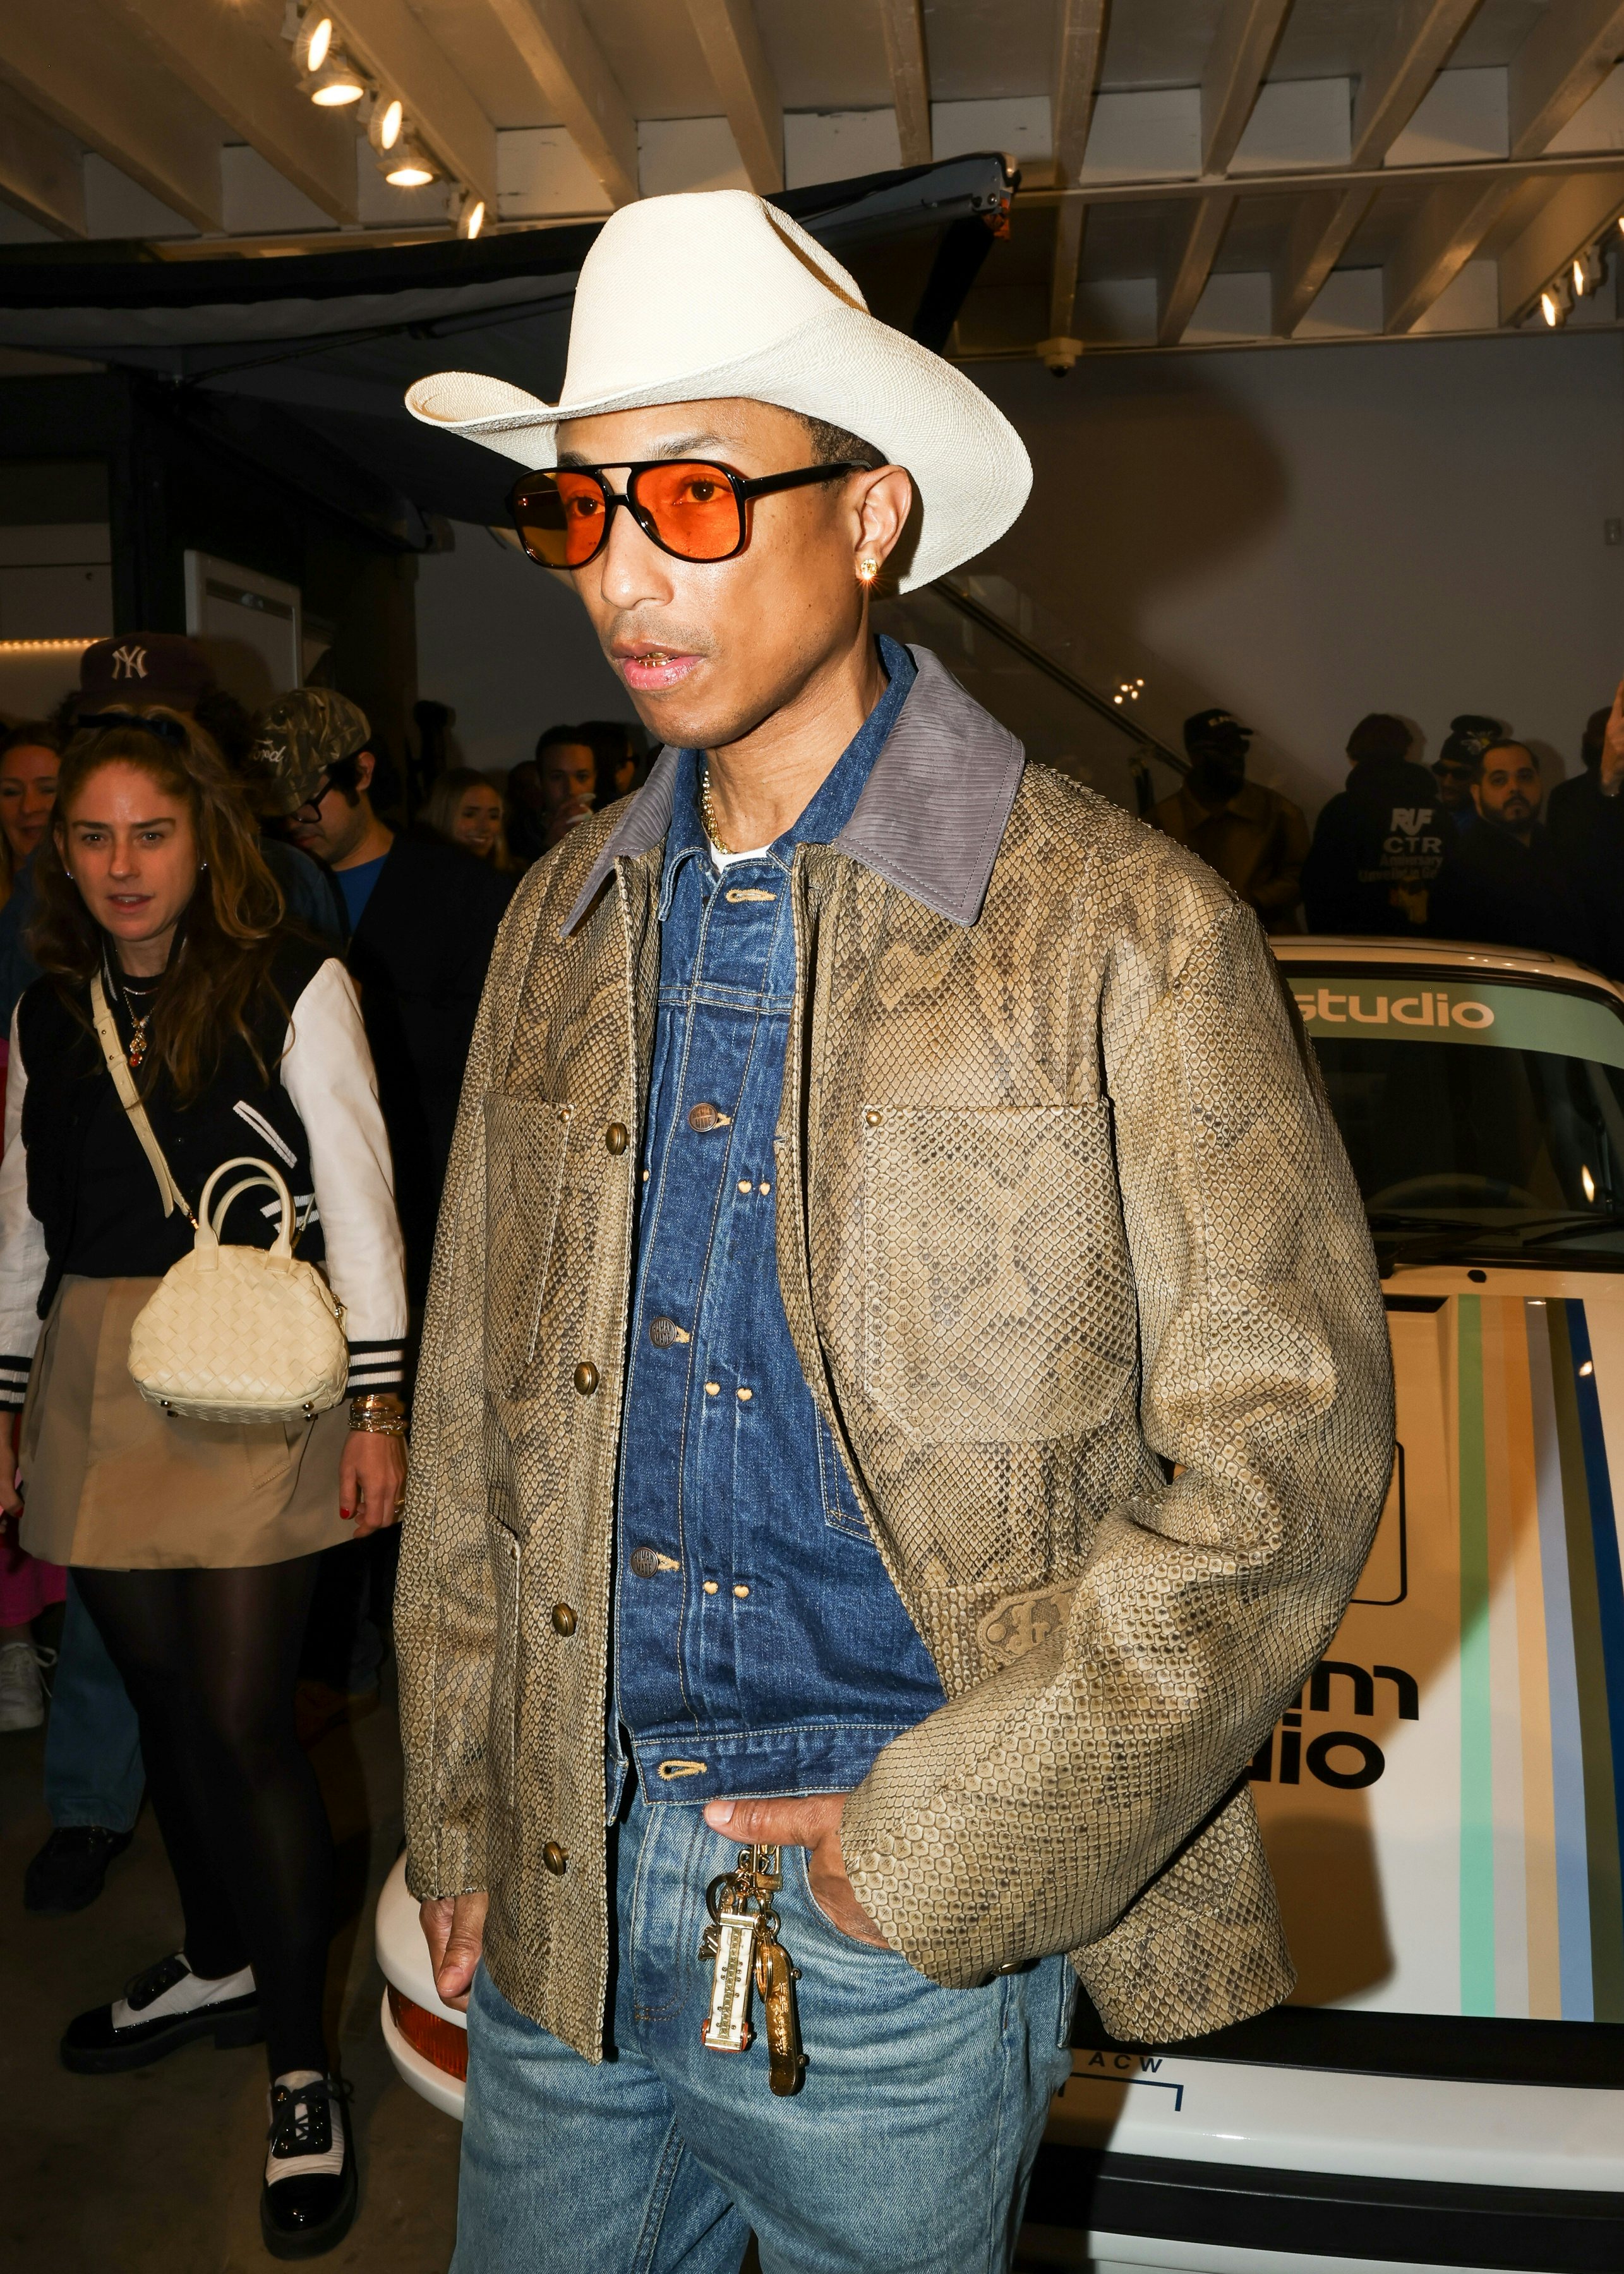 Pharrell Williams at the Joopiter ‘Joyride’ auction launch event in New York. Photo: Joopiter